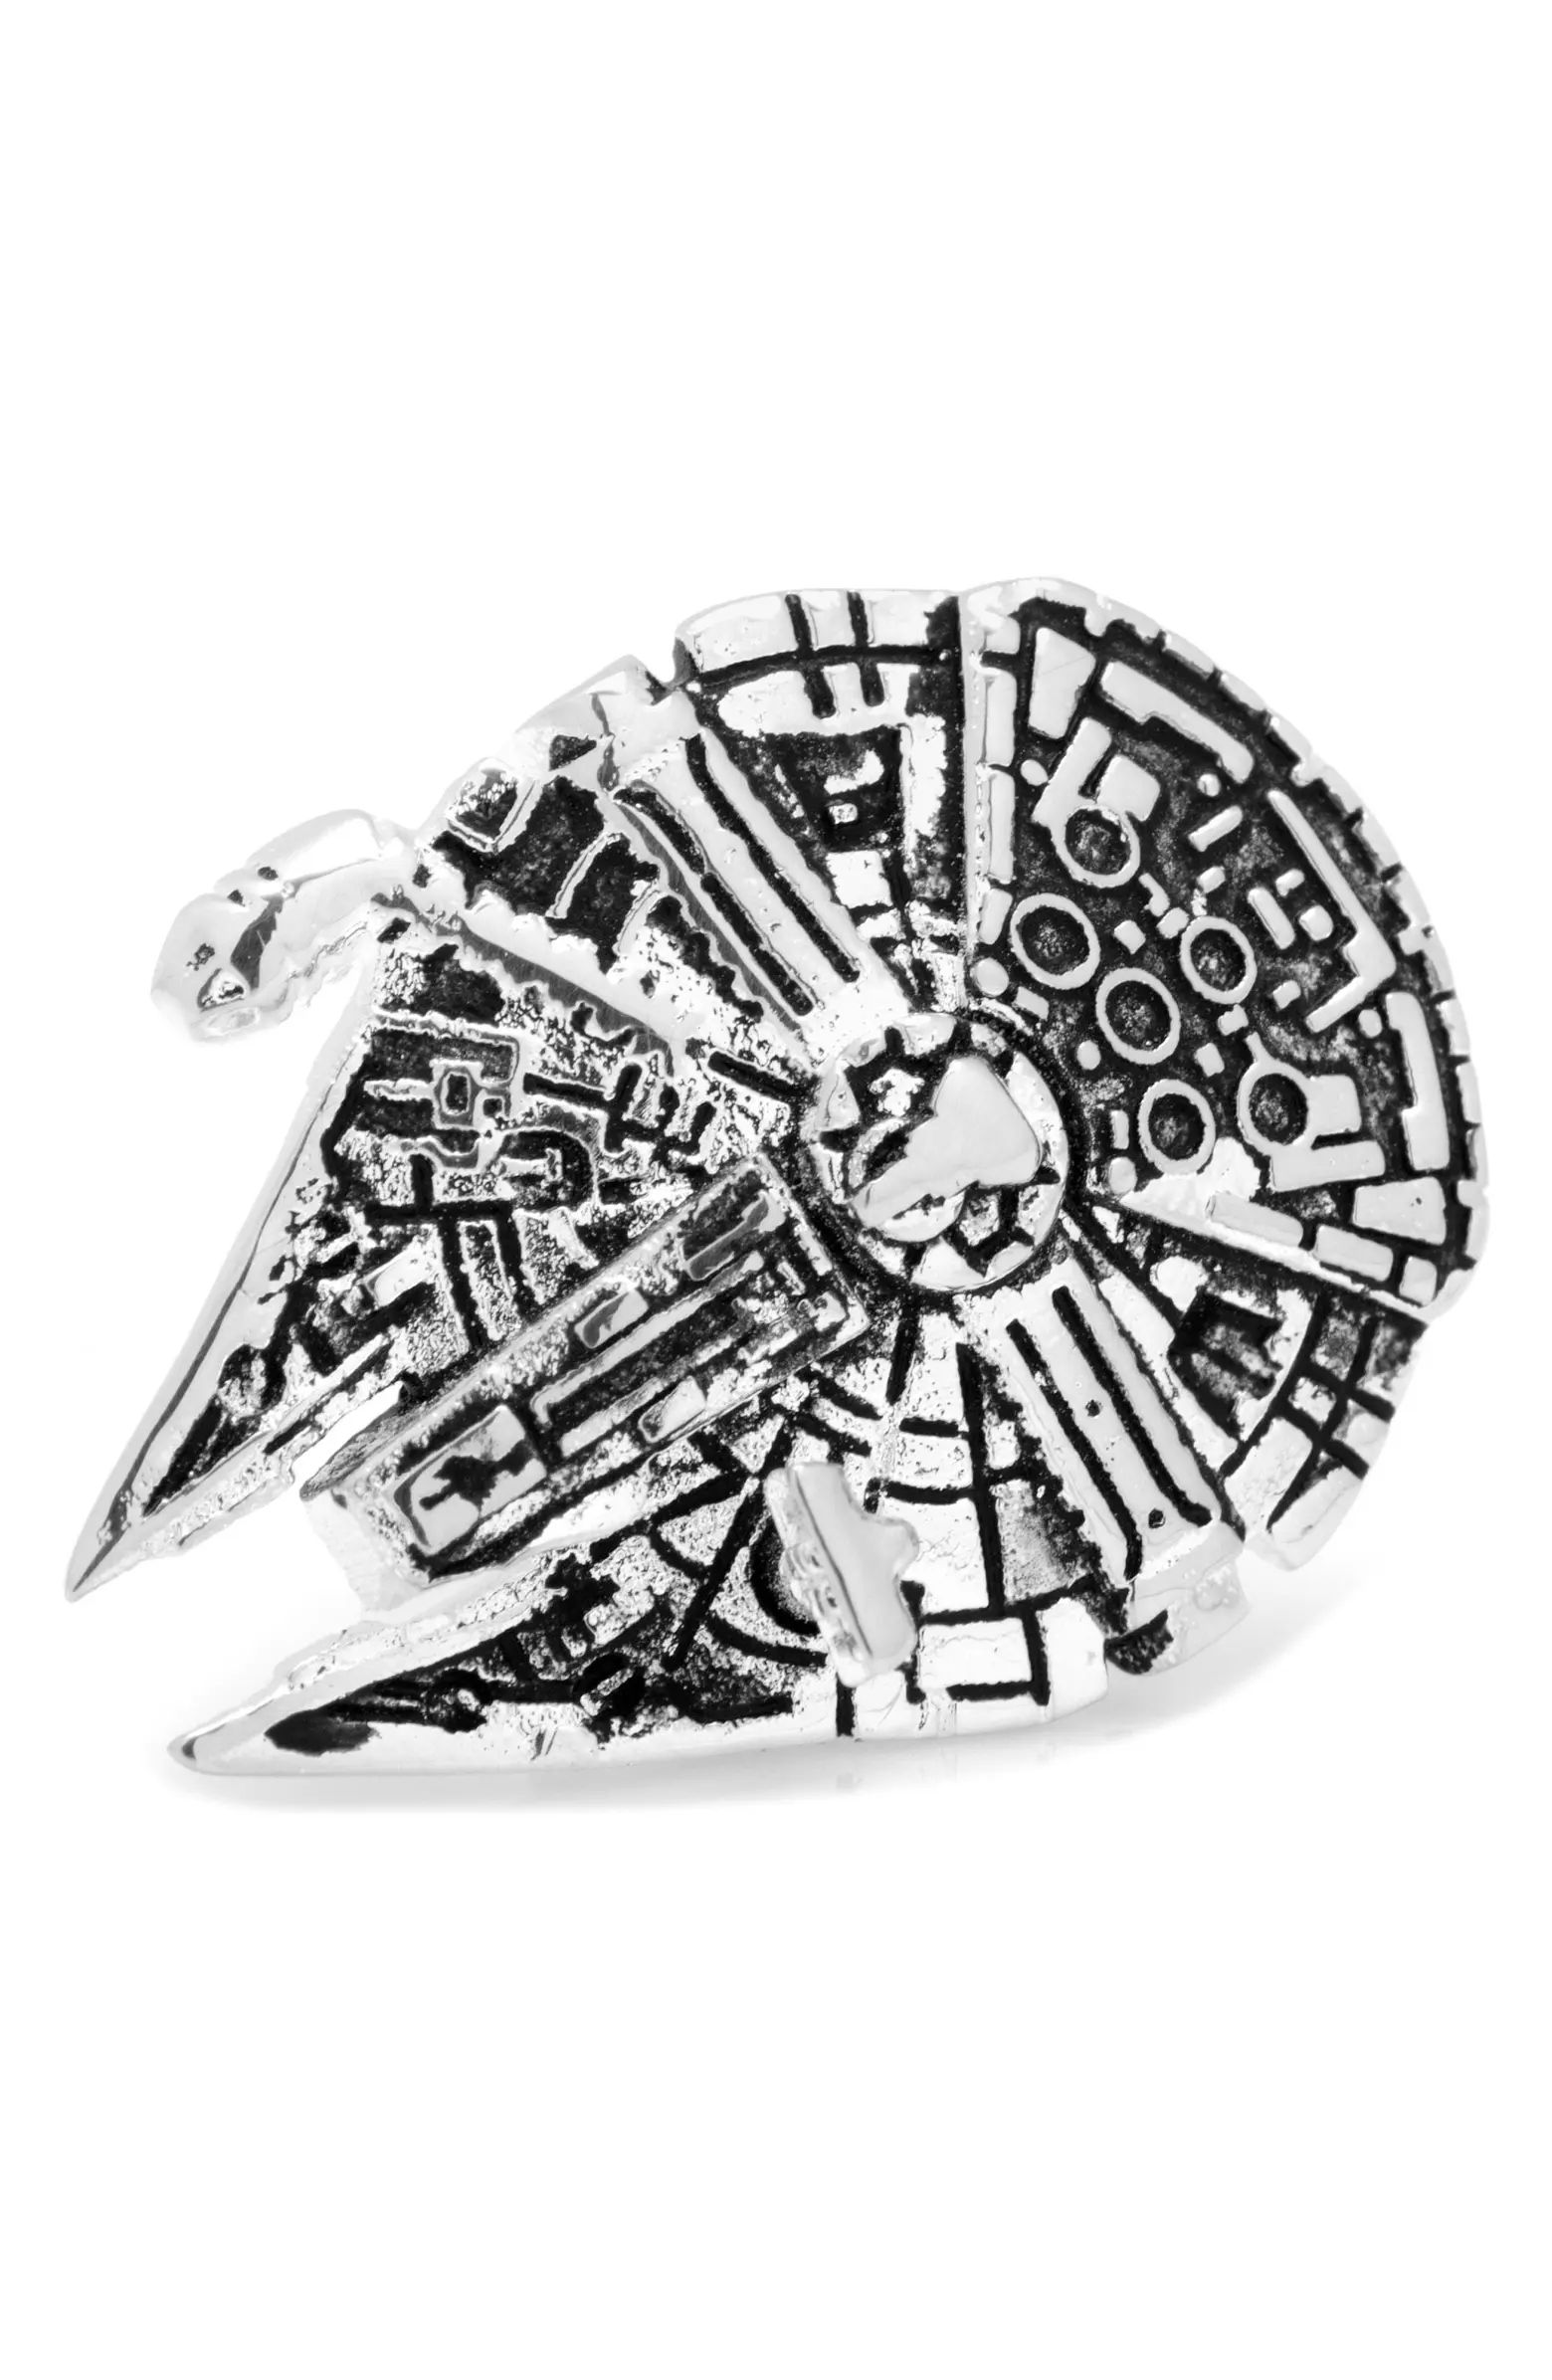 Cufflinks Inc. "Star Wars" 3D Millennium Falcon Lapel Pin | Nordstrom